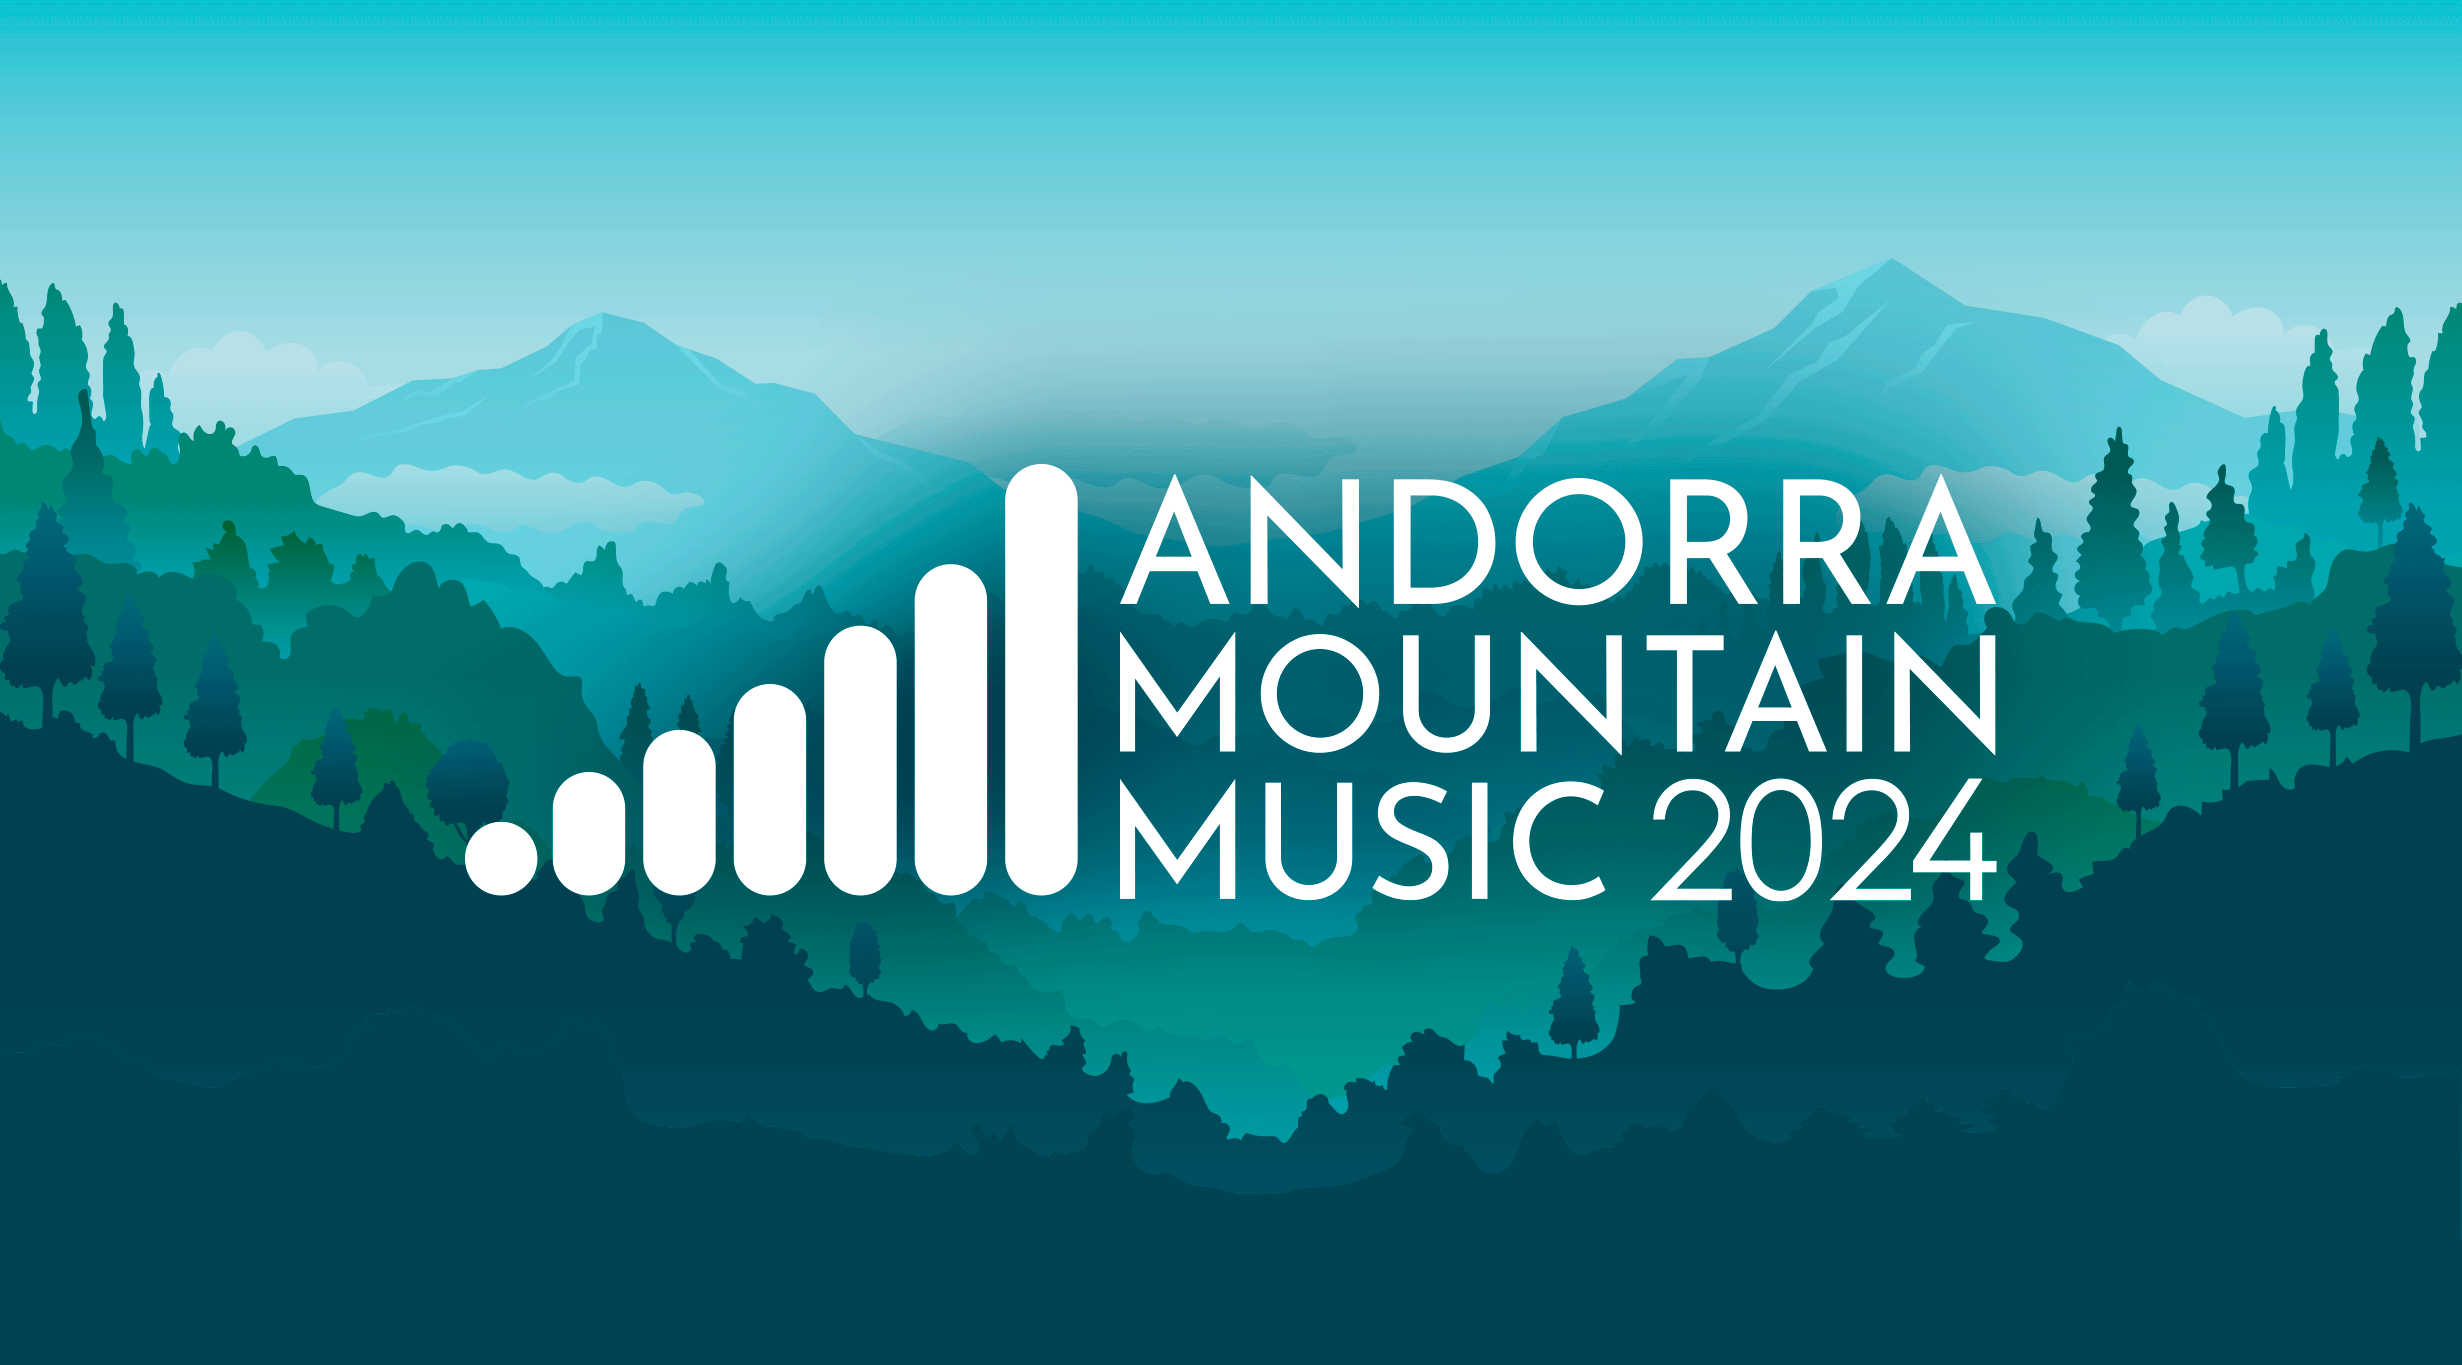 Andorra Mountain Music presale information on freepresalepasswords.com